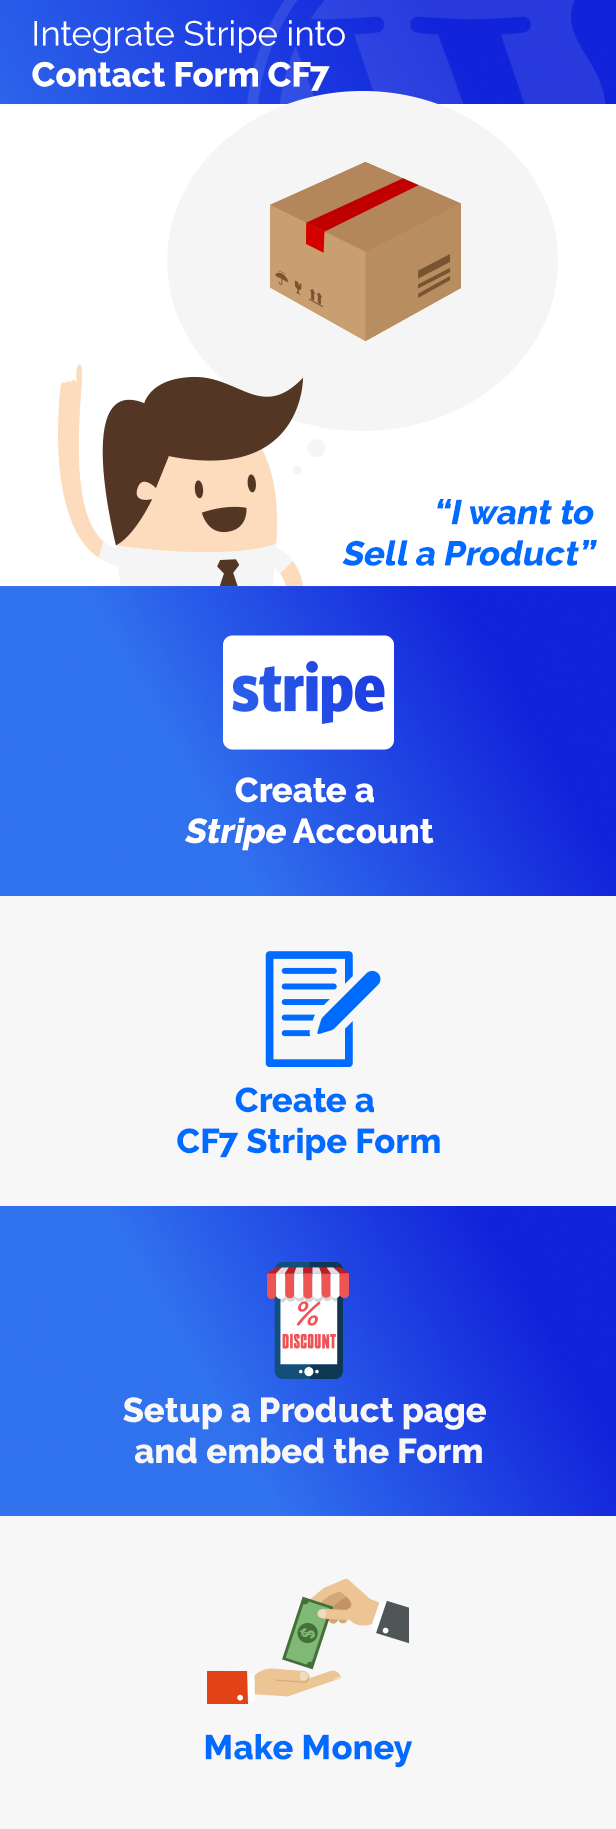 Create a Stripe Account, Setup a form, embed it on a page and make money.